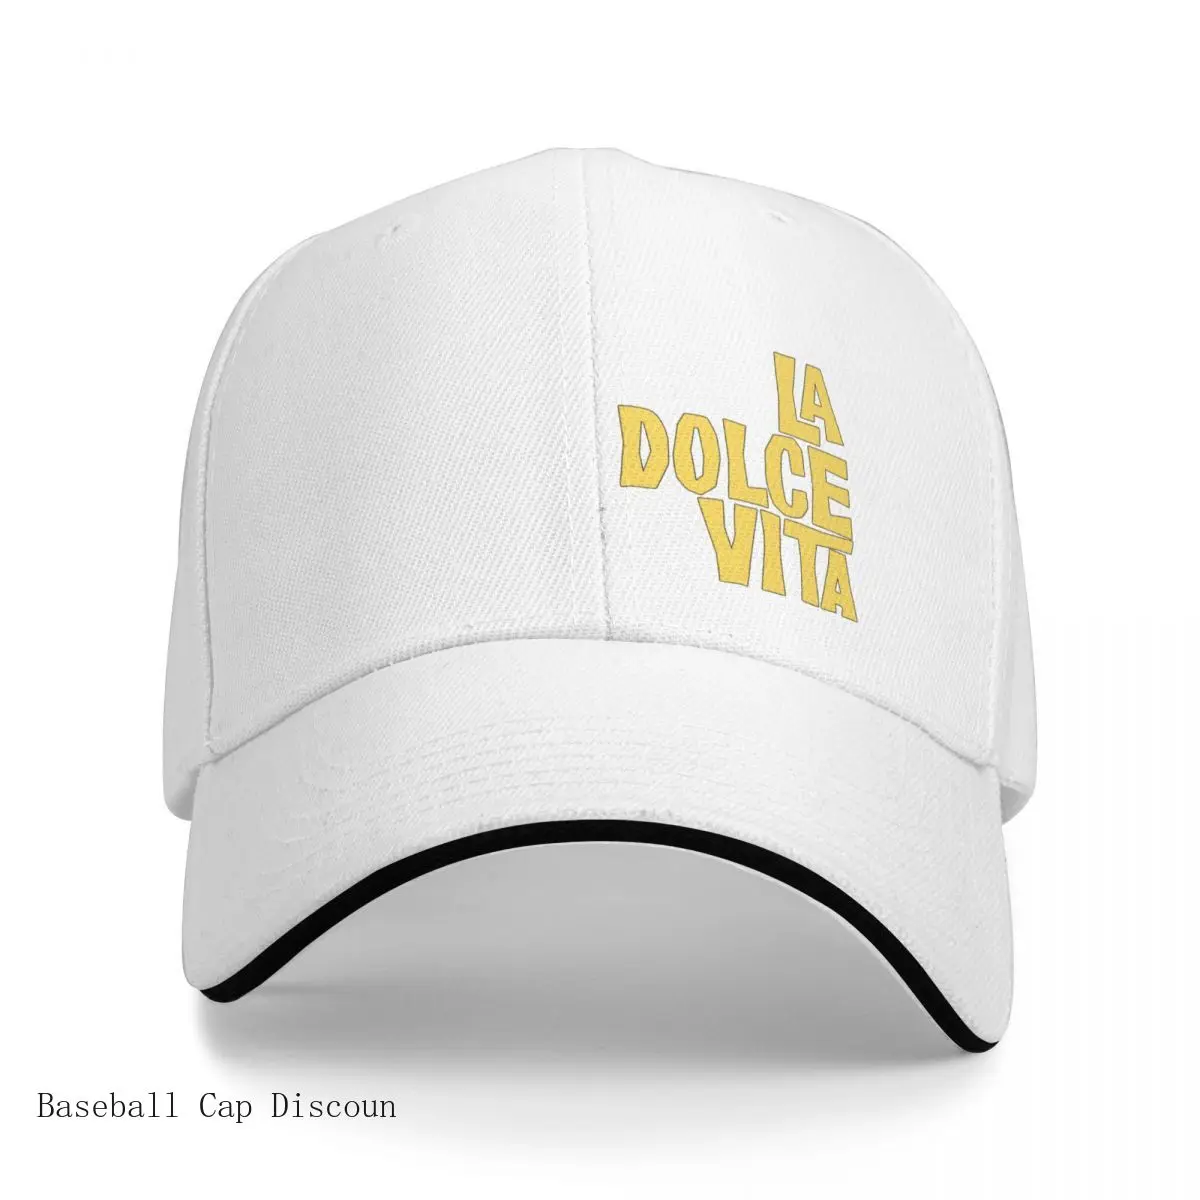 

New LA DOLCE VITA Sticker Cap Baseball Cap Caps Luxury Hat Hat For Man Women's